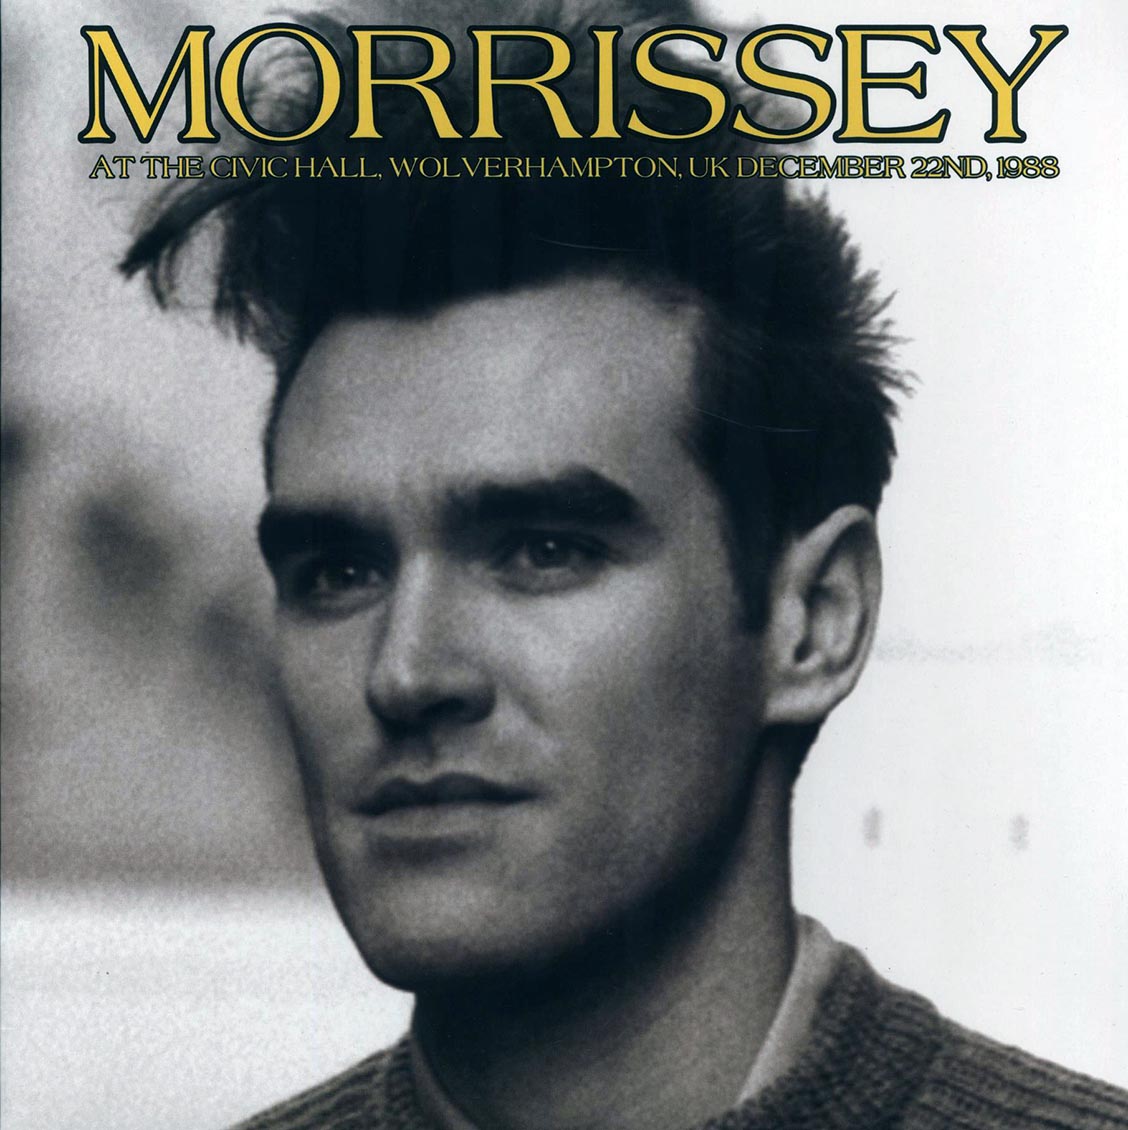 Morrissey - At The Civic Hall, Wolverhampton, UK December 22nd, 1988